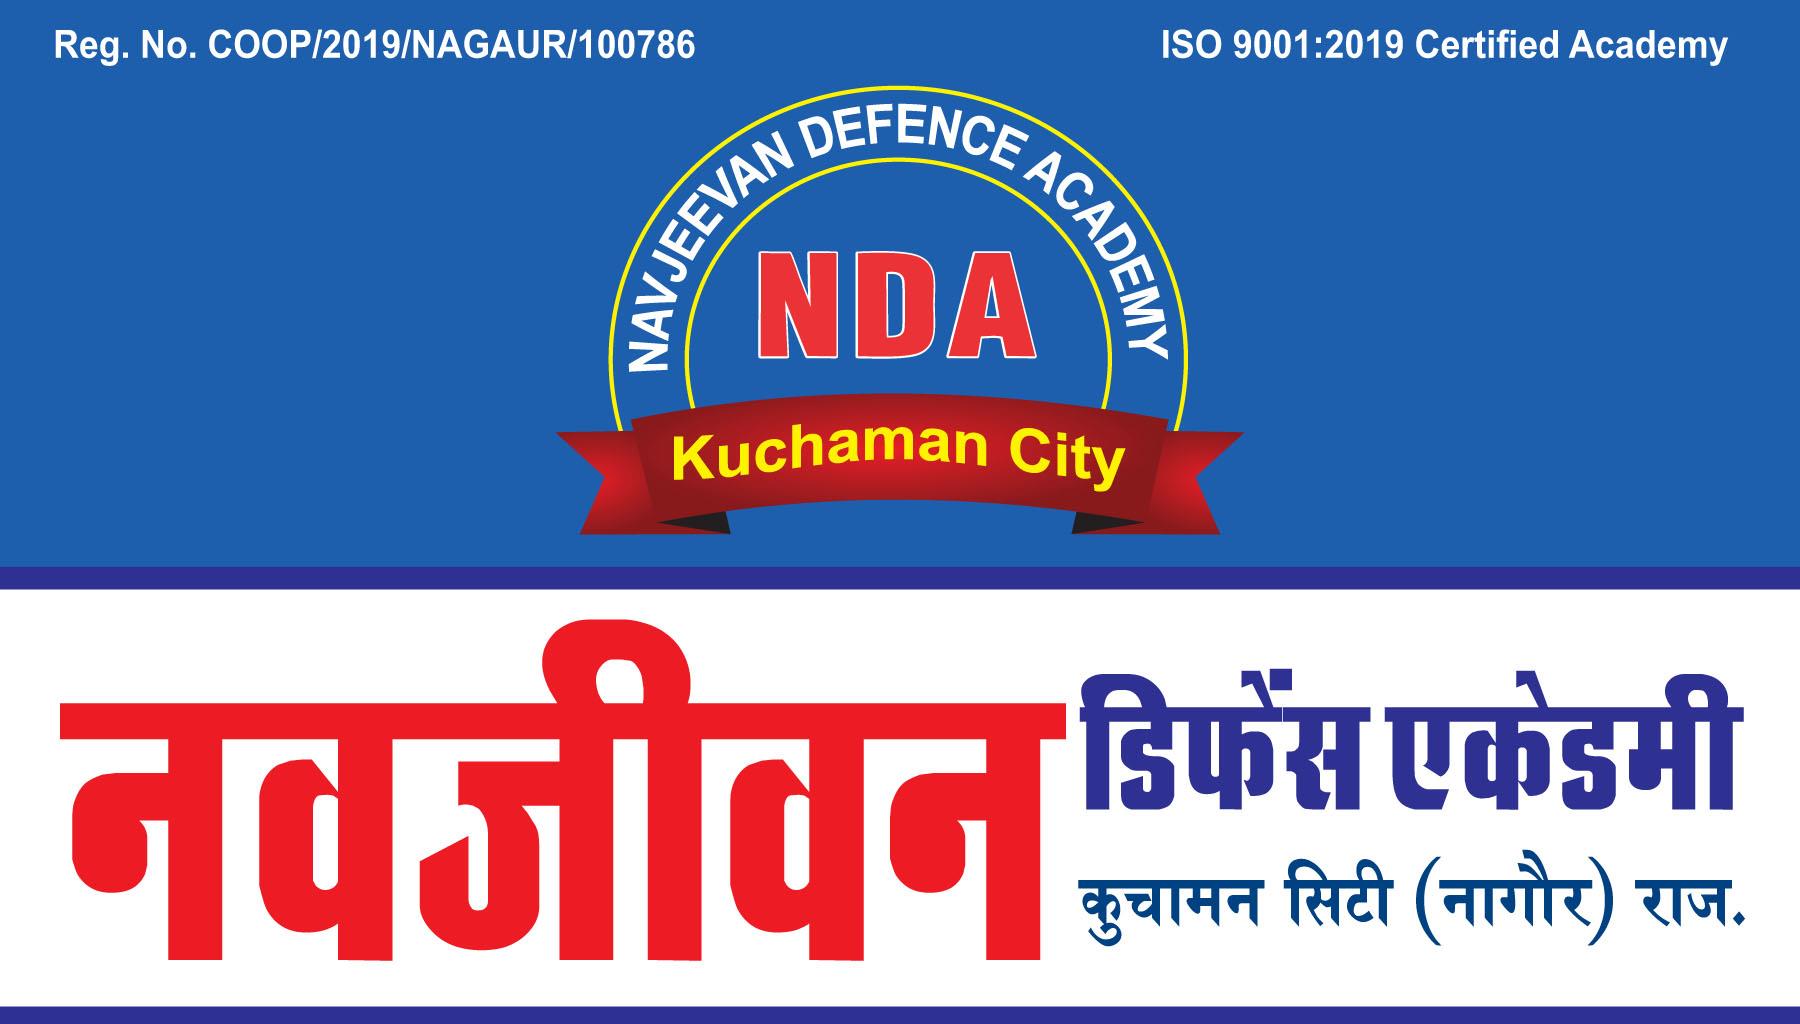 Navjeevan Defence Academy, Kuchaman City (Nagaur) Rajasthan